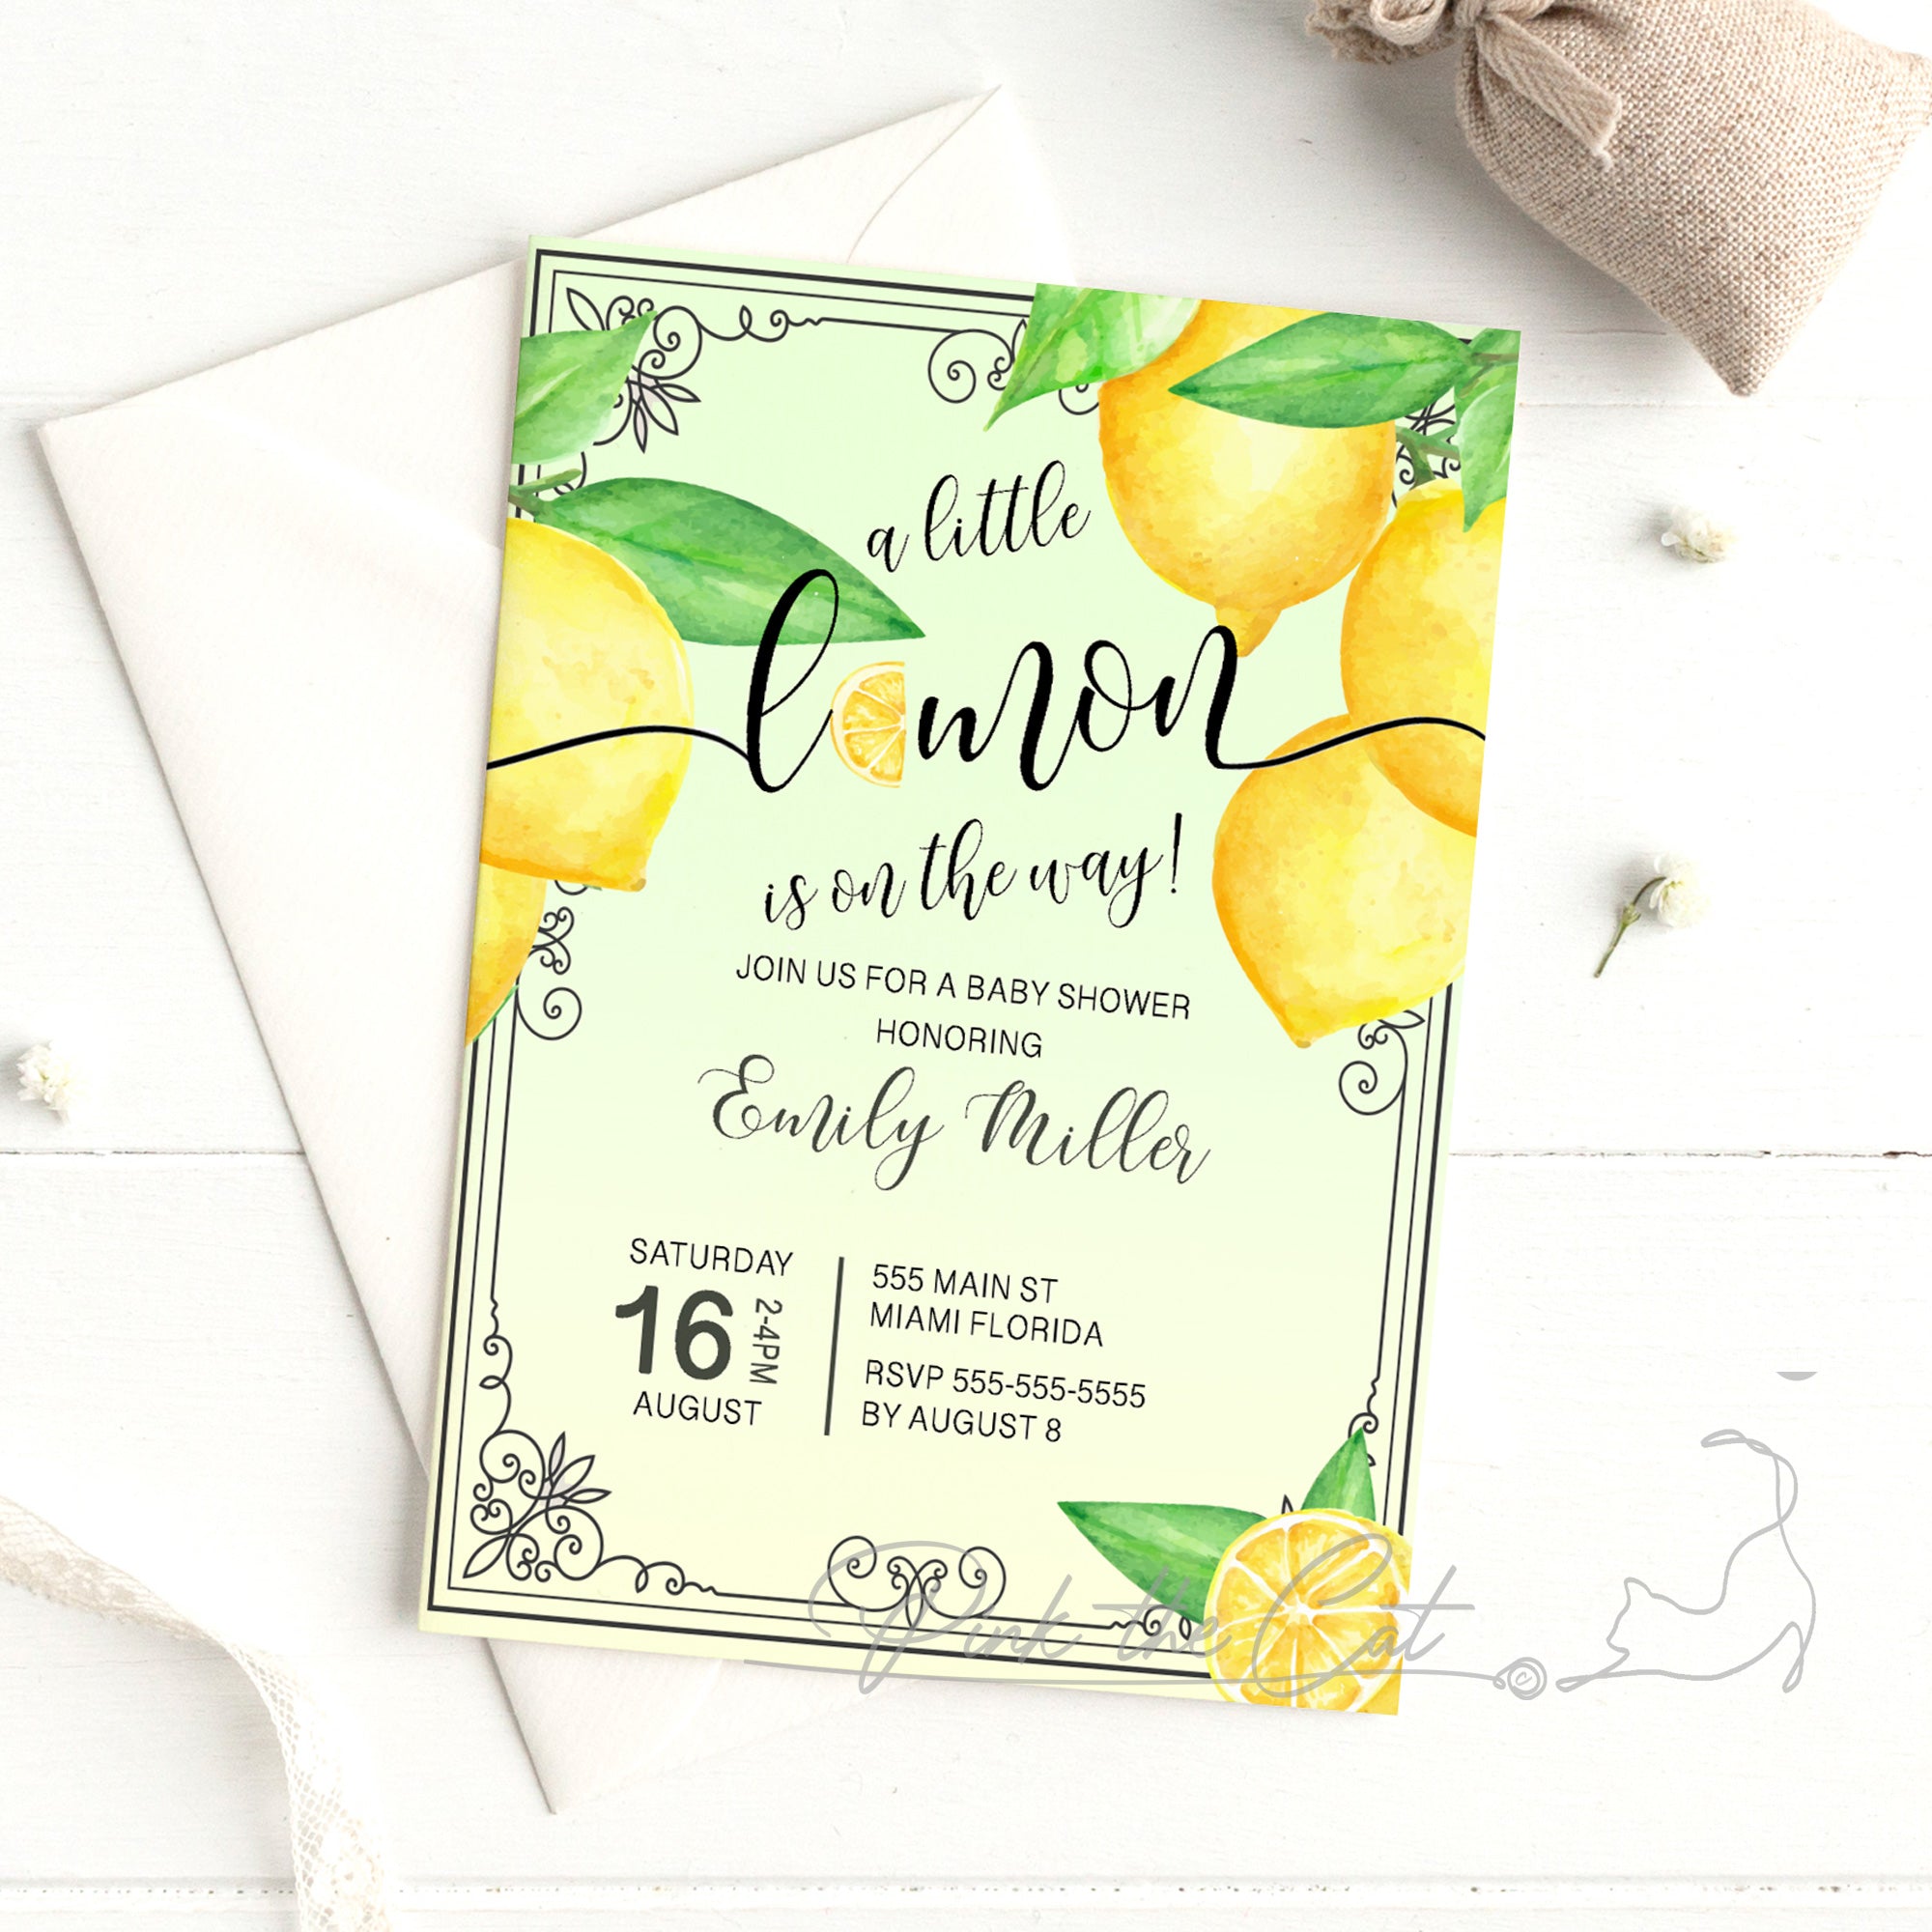 Little lemon watercolor invitation